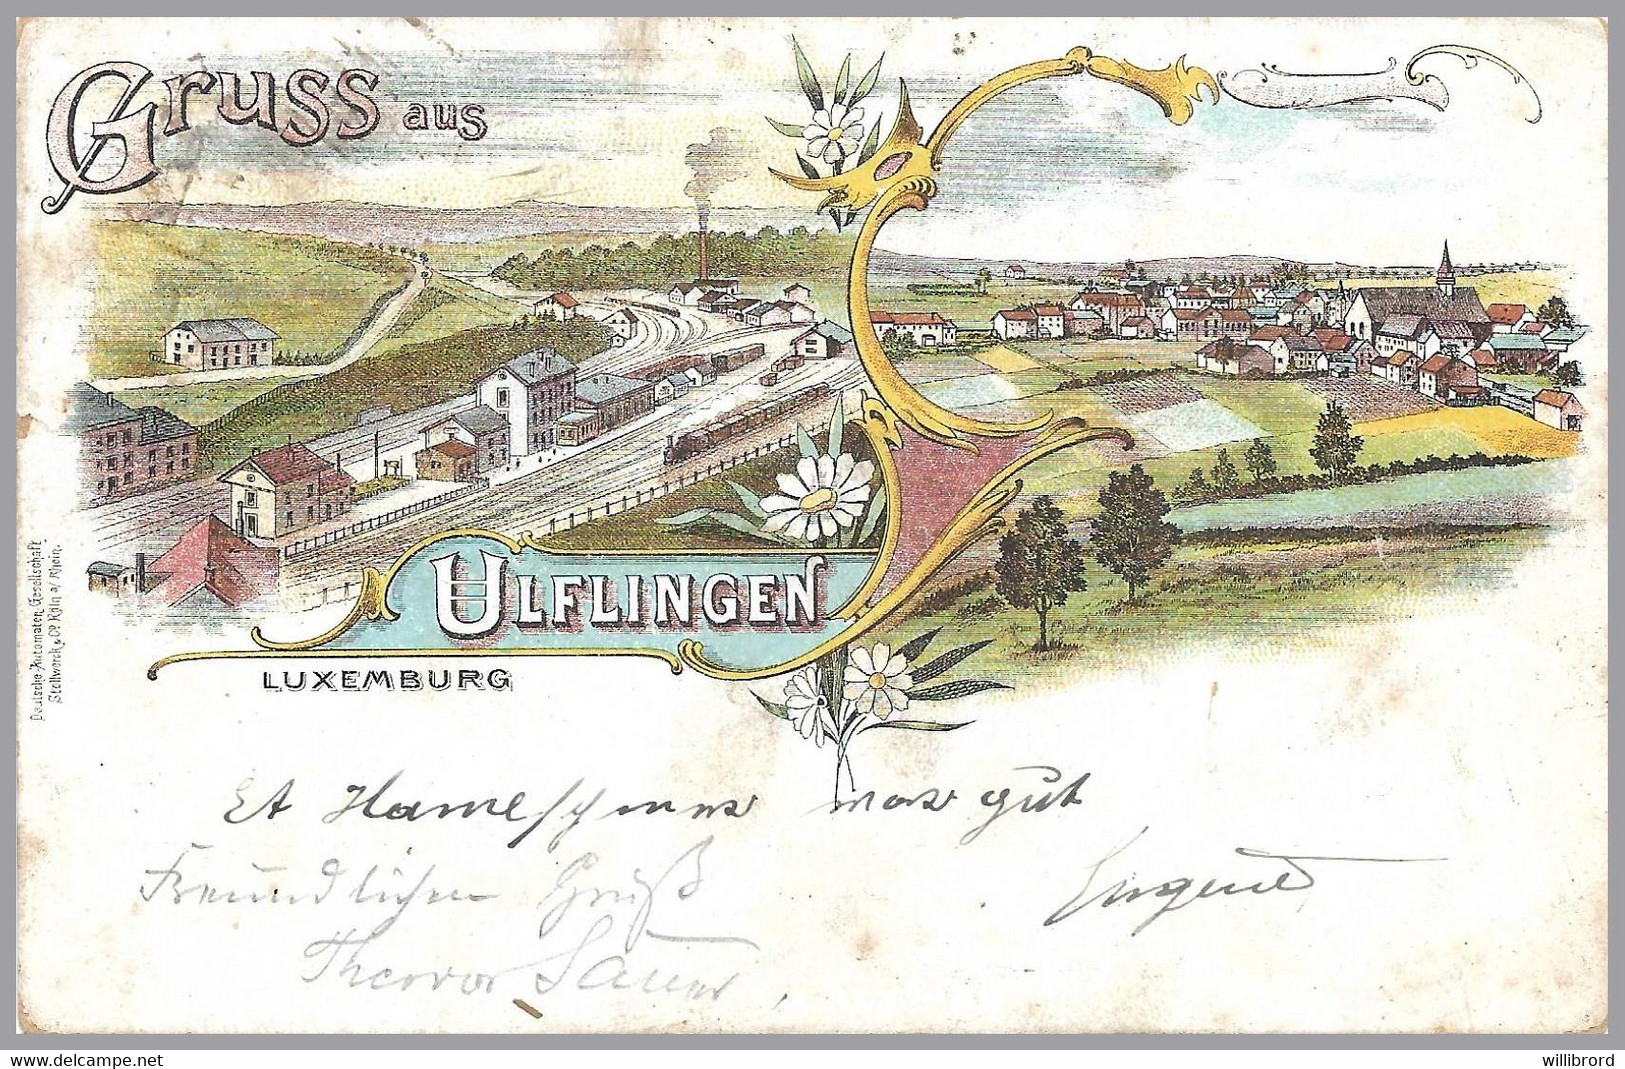 LUXEMBOURG - 1899 GRUSS AUS ULFLINGEN - RPO Ulflingen-Luxemburg Cancel - Used To MERSCH - Undivided Back - 1895 Adolphe Profil